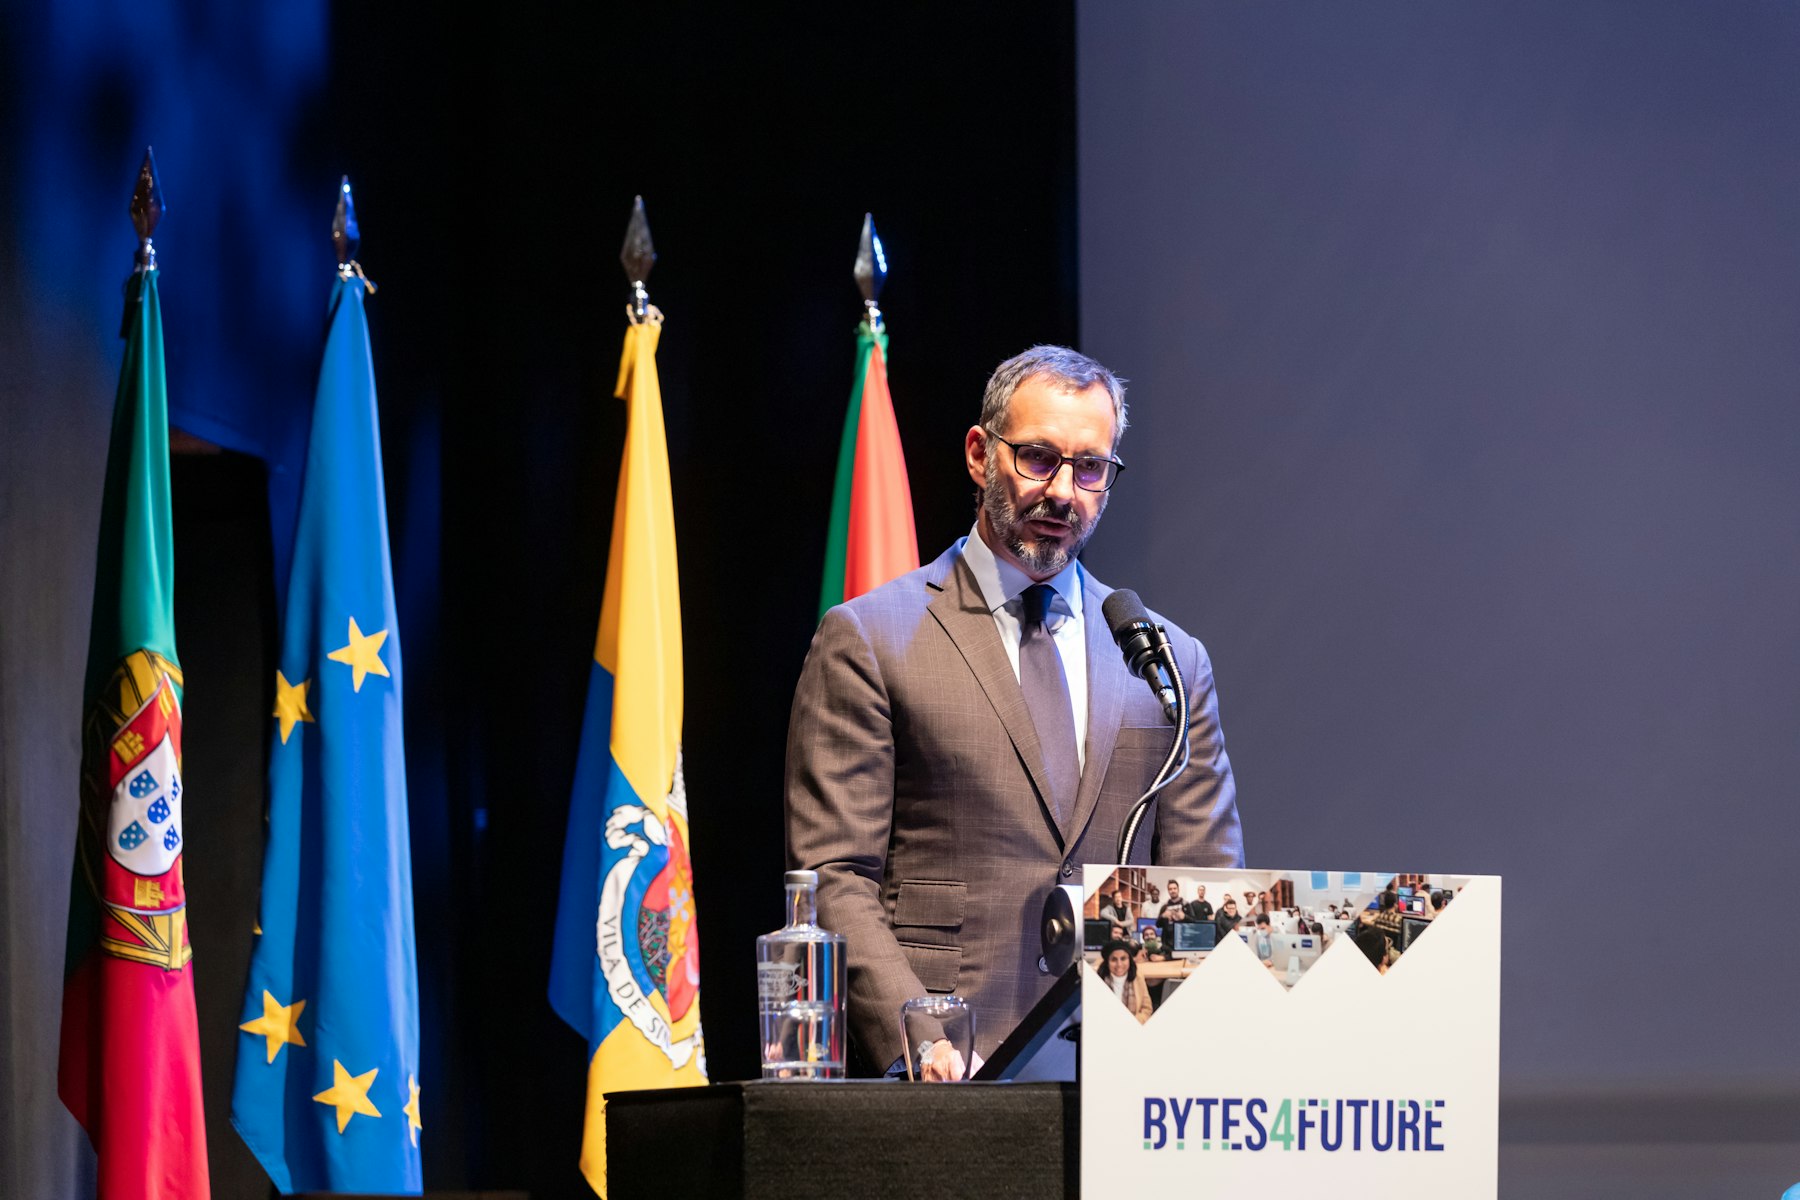 Prince Rahim Aga Khan addresses the audience at the Bytes4Future conference | AKDN / Rui Gouveia